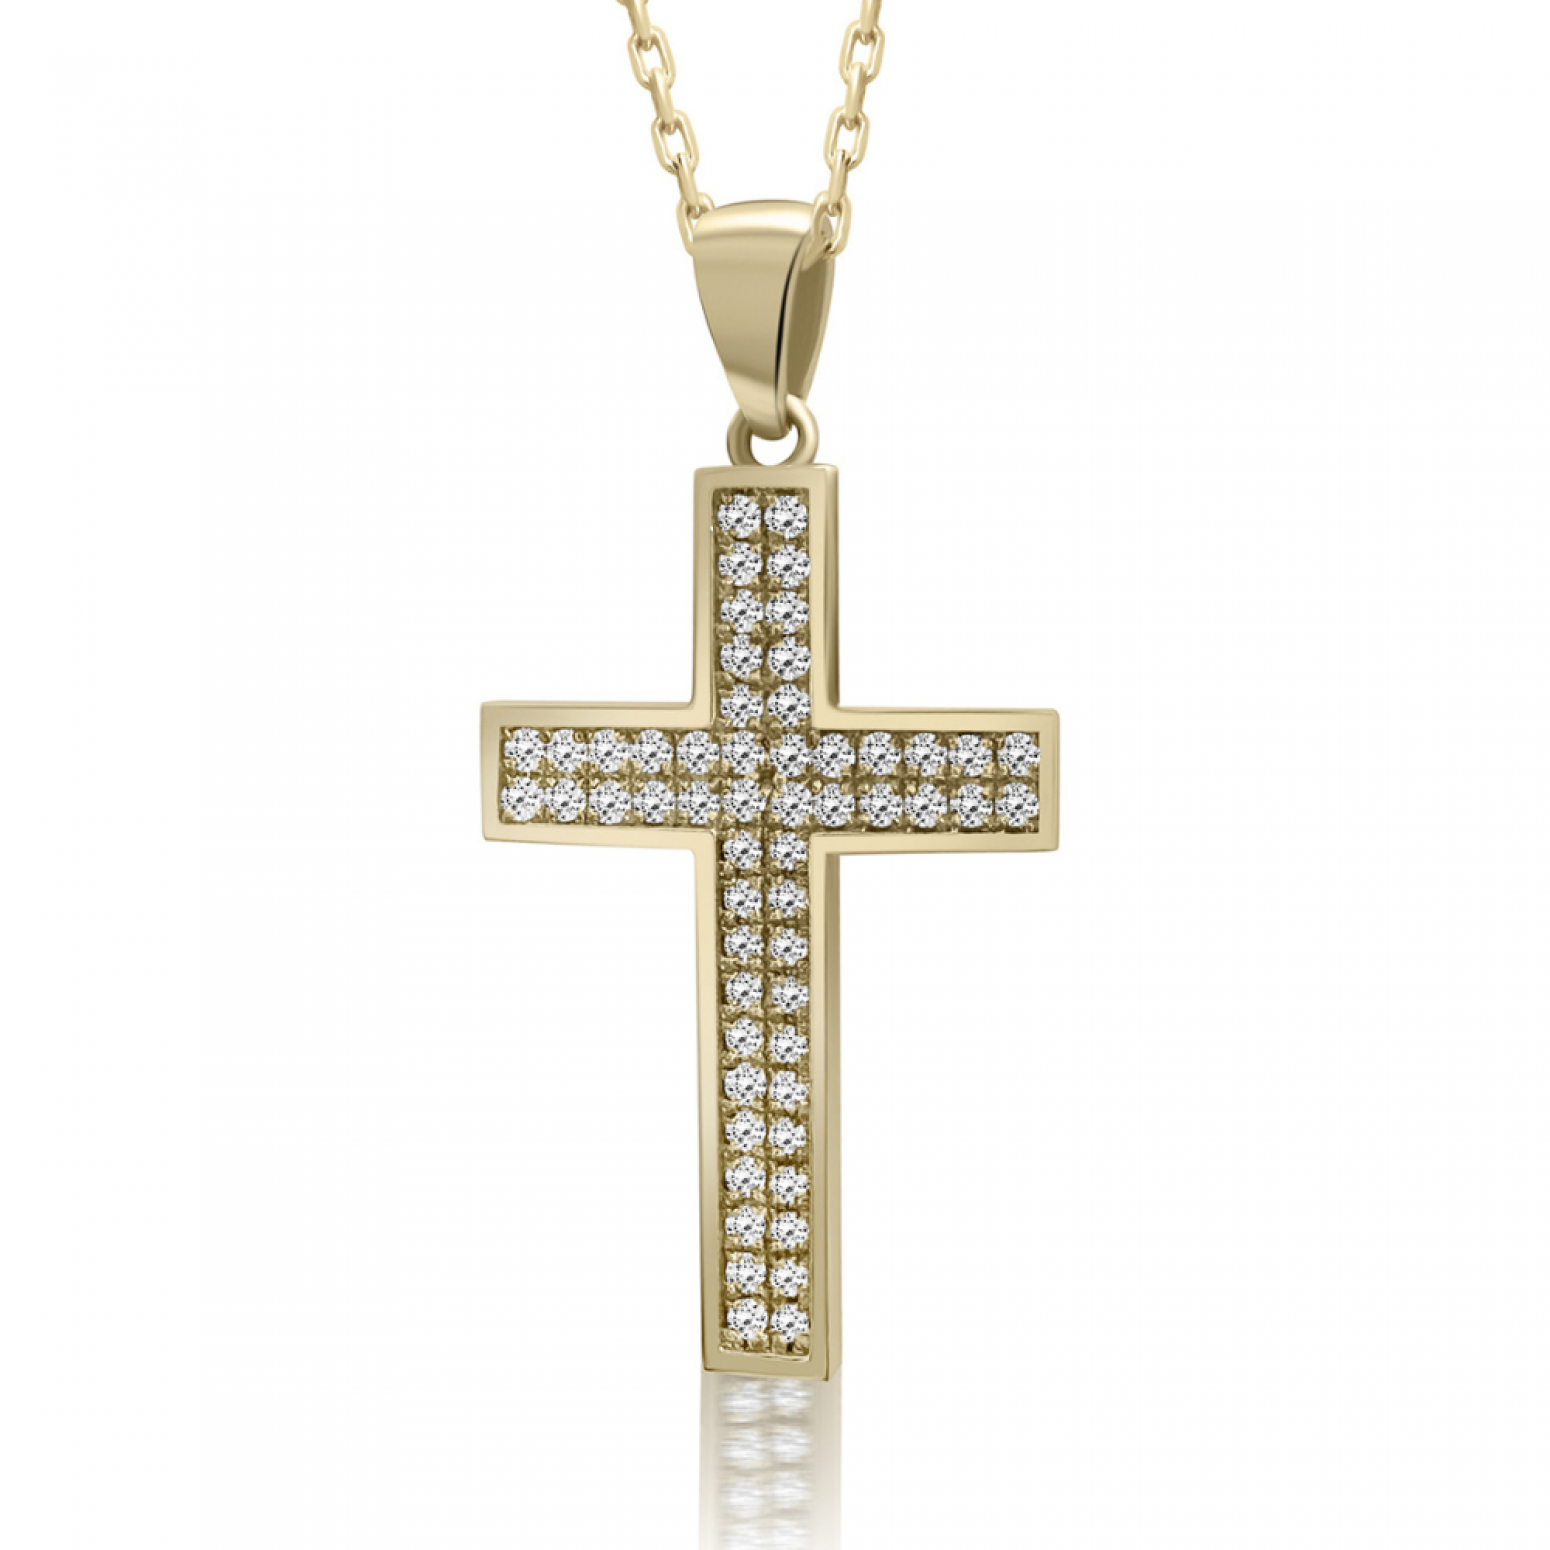 Baptism cross with chain K18 gold with diamonds 0.21ct, VS1, G ko6077 CROSSES Κοσμηματα - chrilia.gr